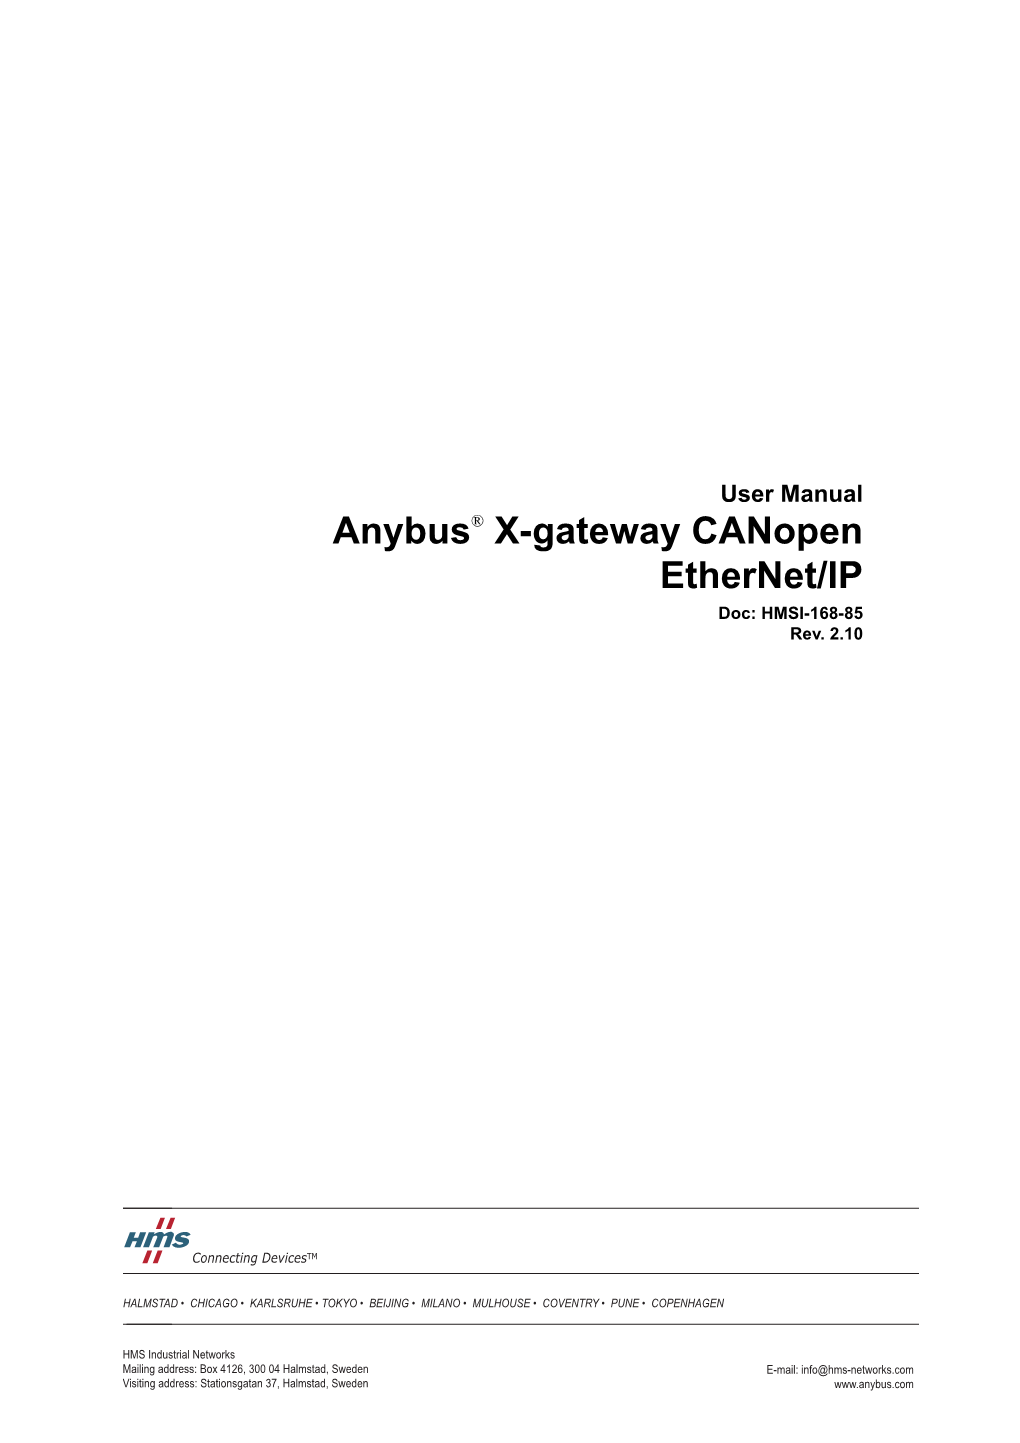 Anybus® X-Gateway Canopen Ethernet/IP Doc: HMSI-168-85 Rev